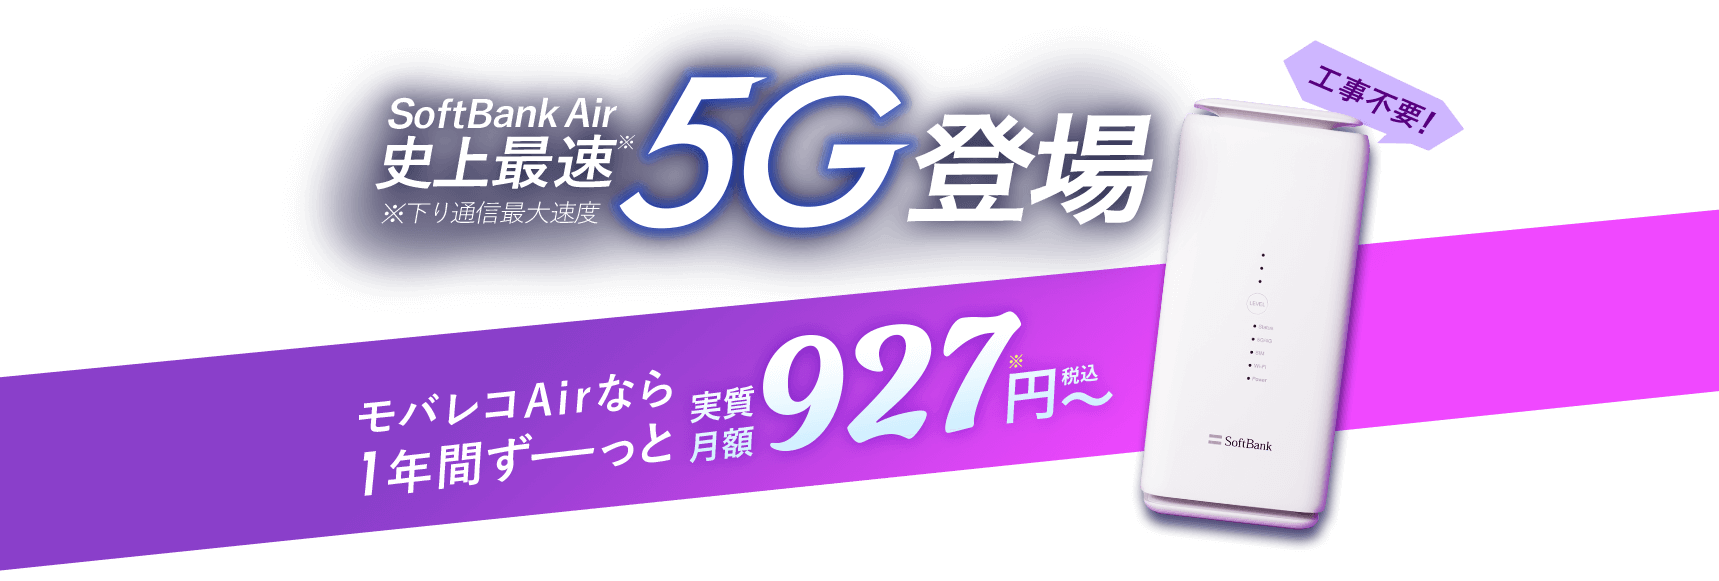 SoftBank Air 史上最速5G登場